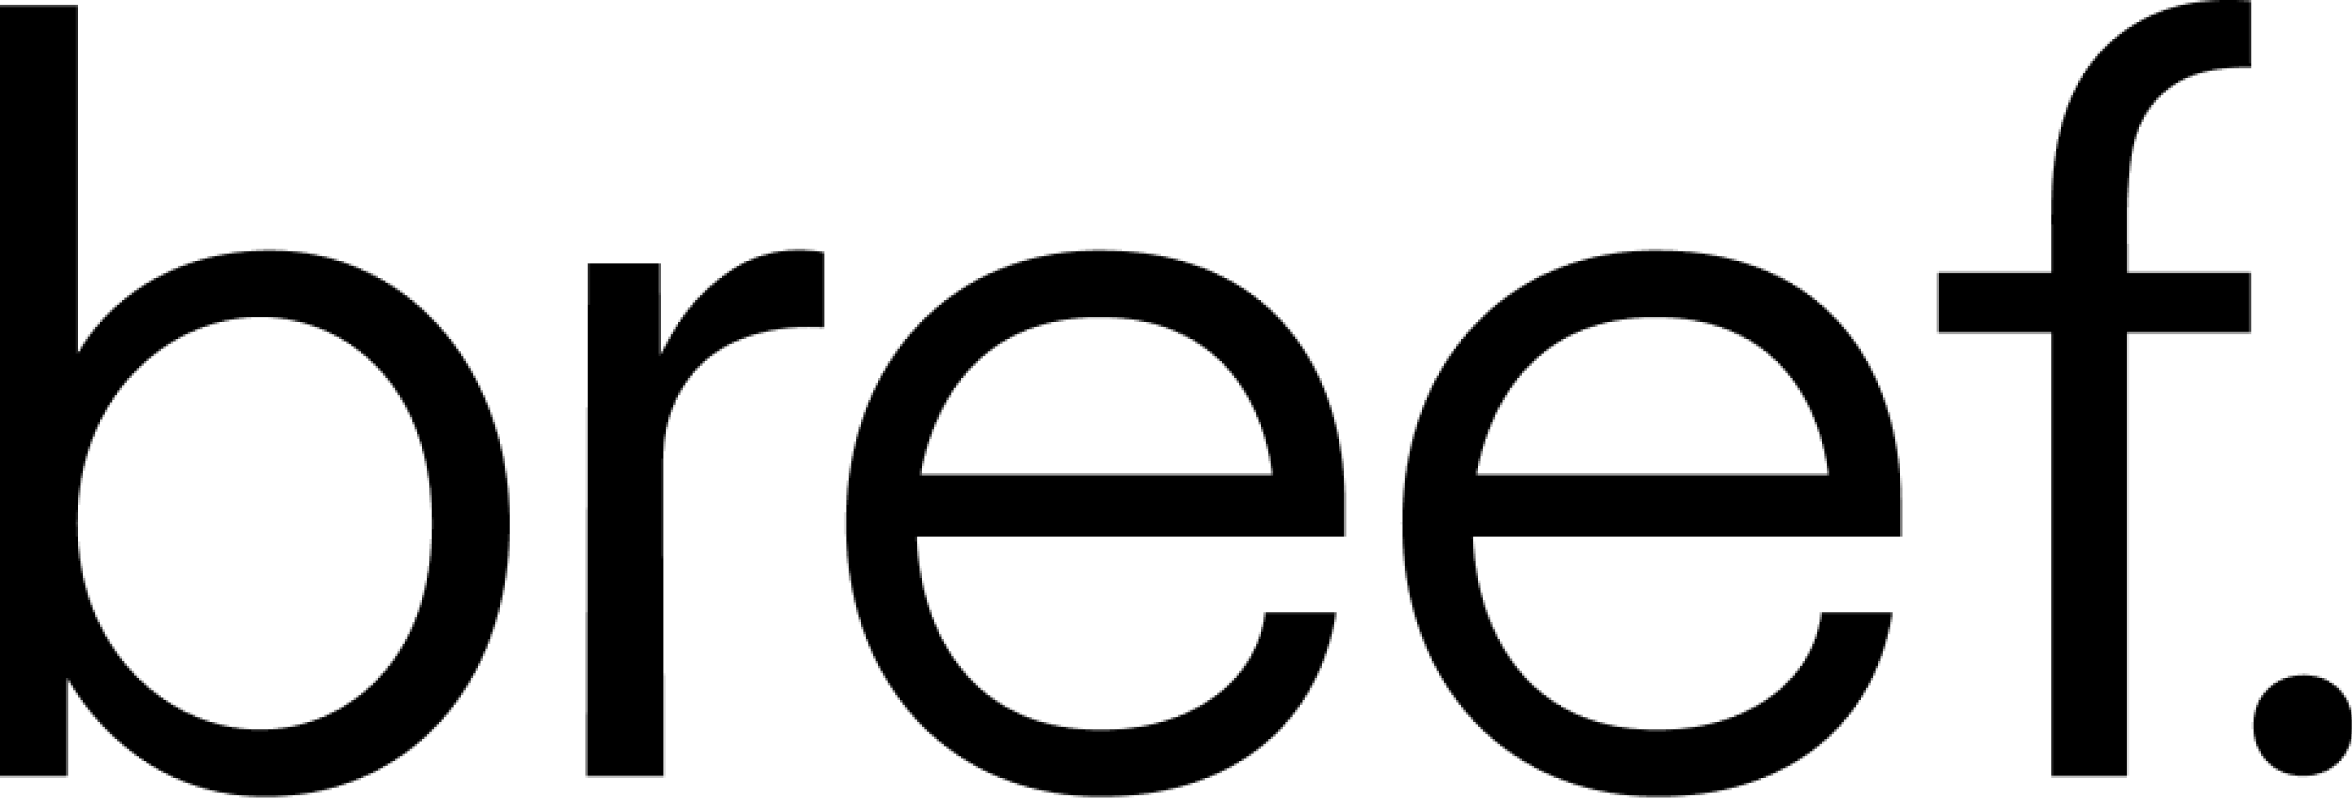 Breef logo